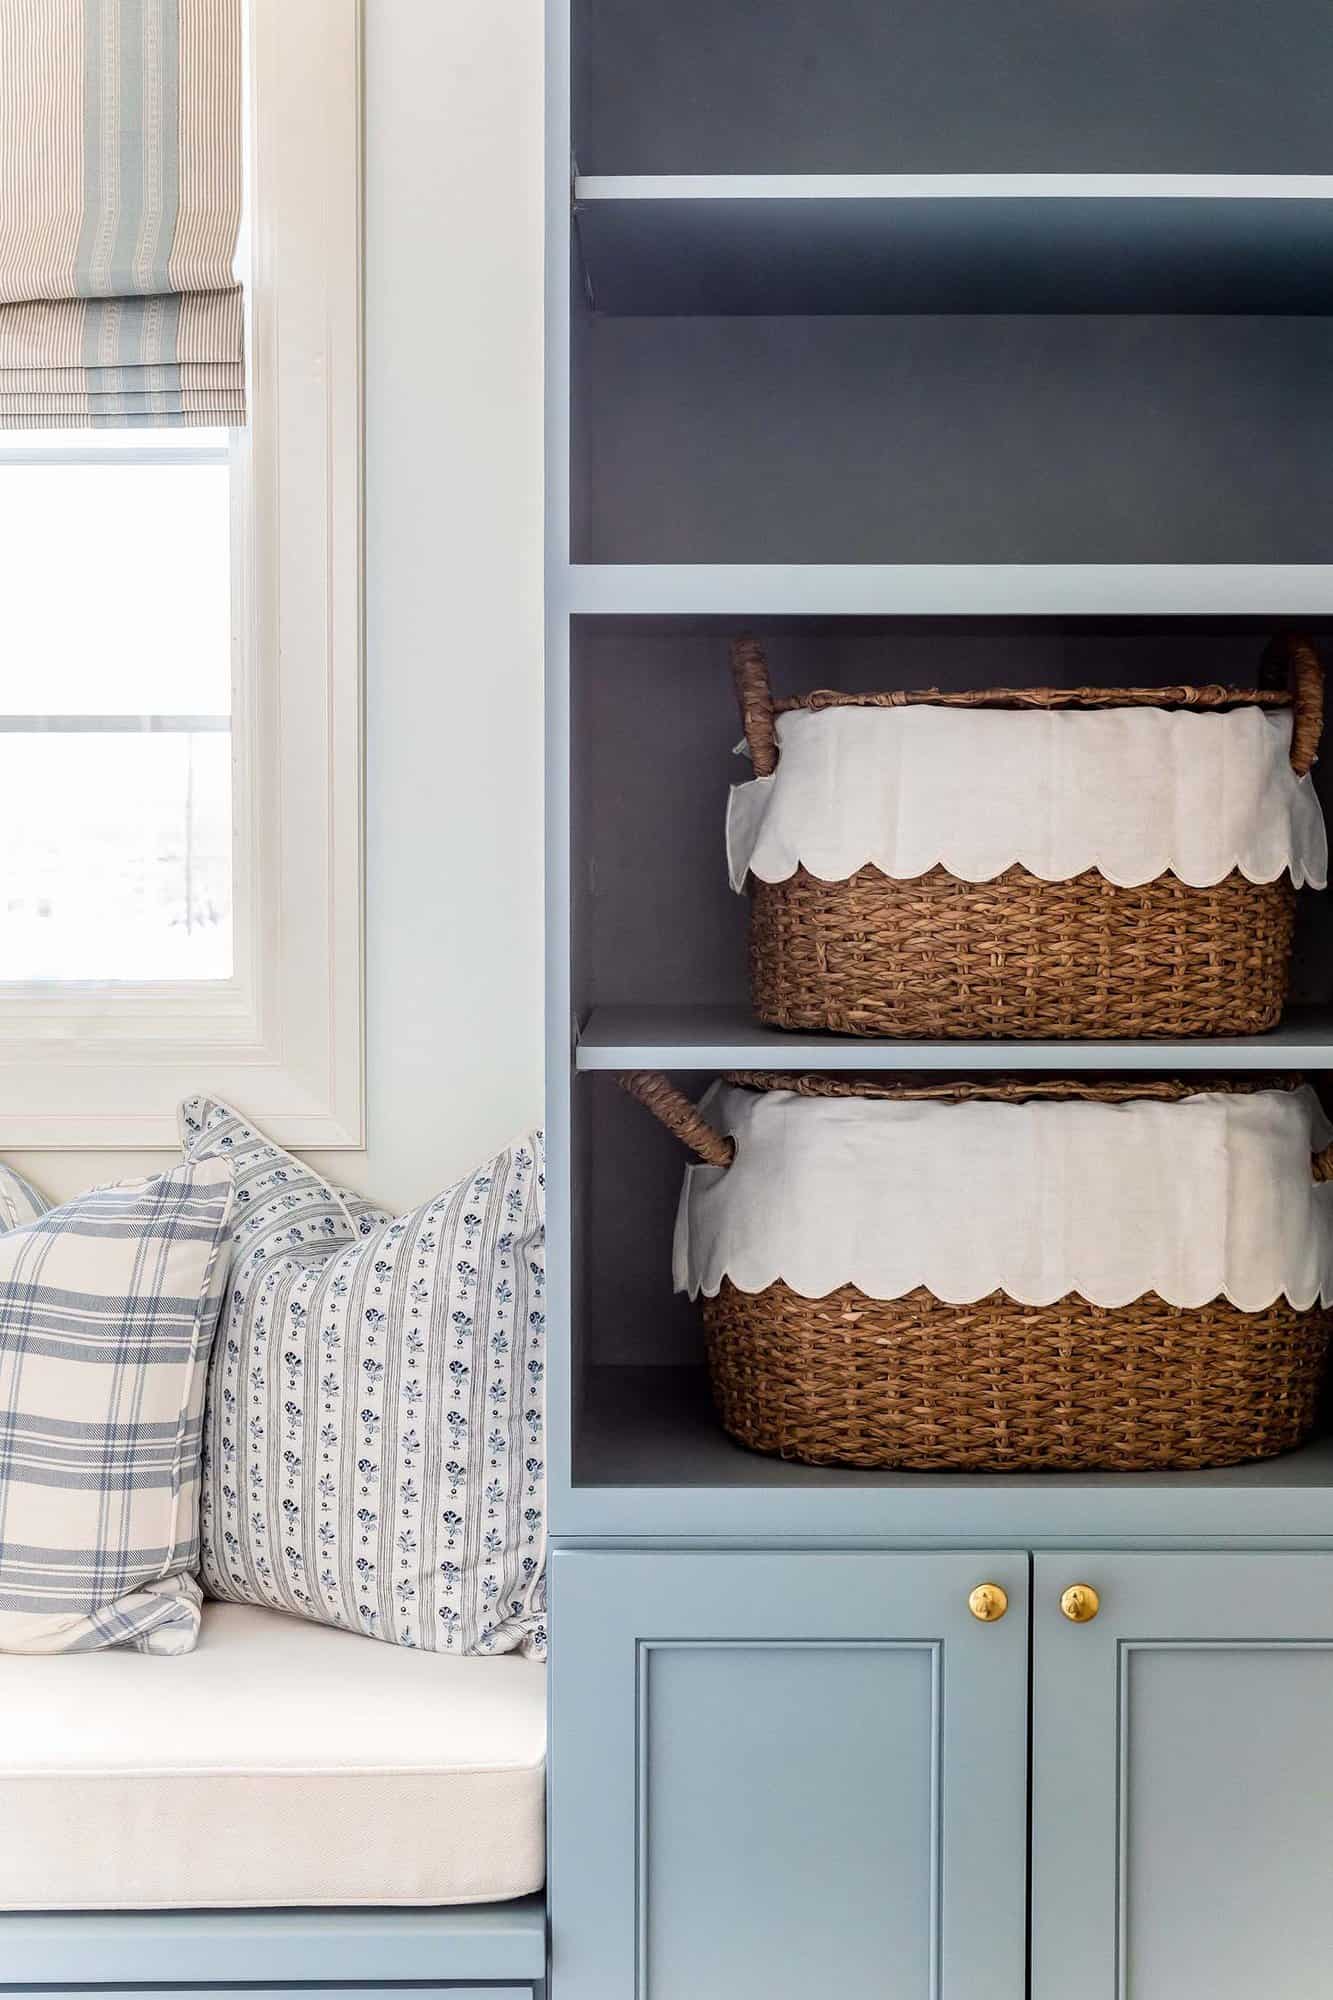 traditional-style-kids-bedroom-window-seat-open-shelf-detail-with-rattan-baskets